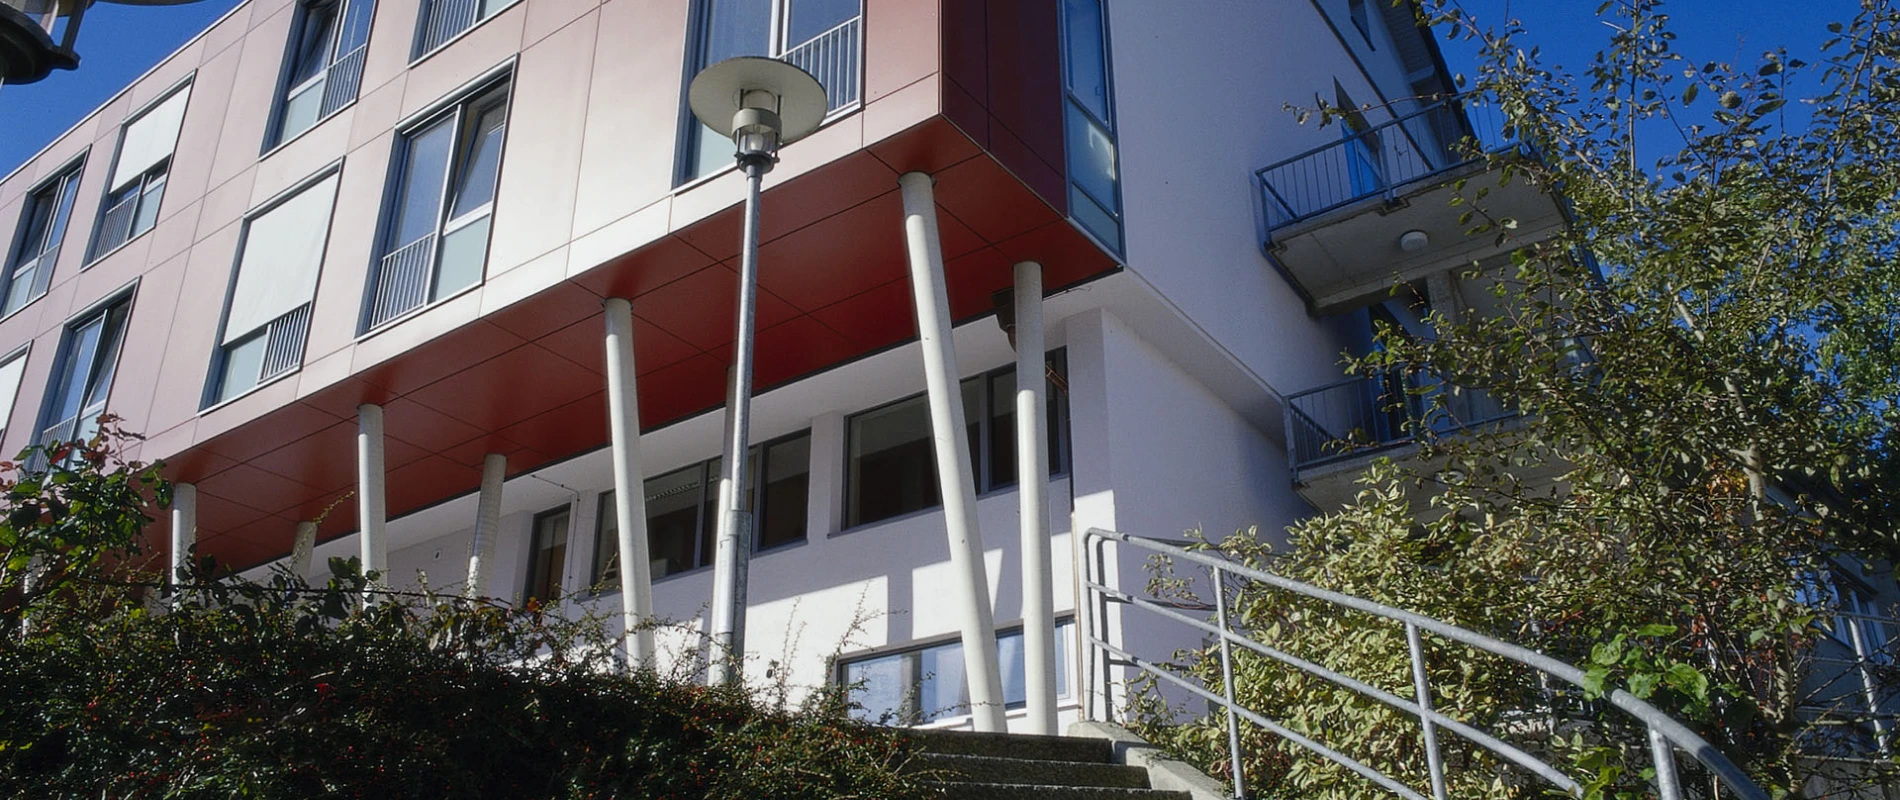 Hospital Laichingen - new construction - facade paneling